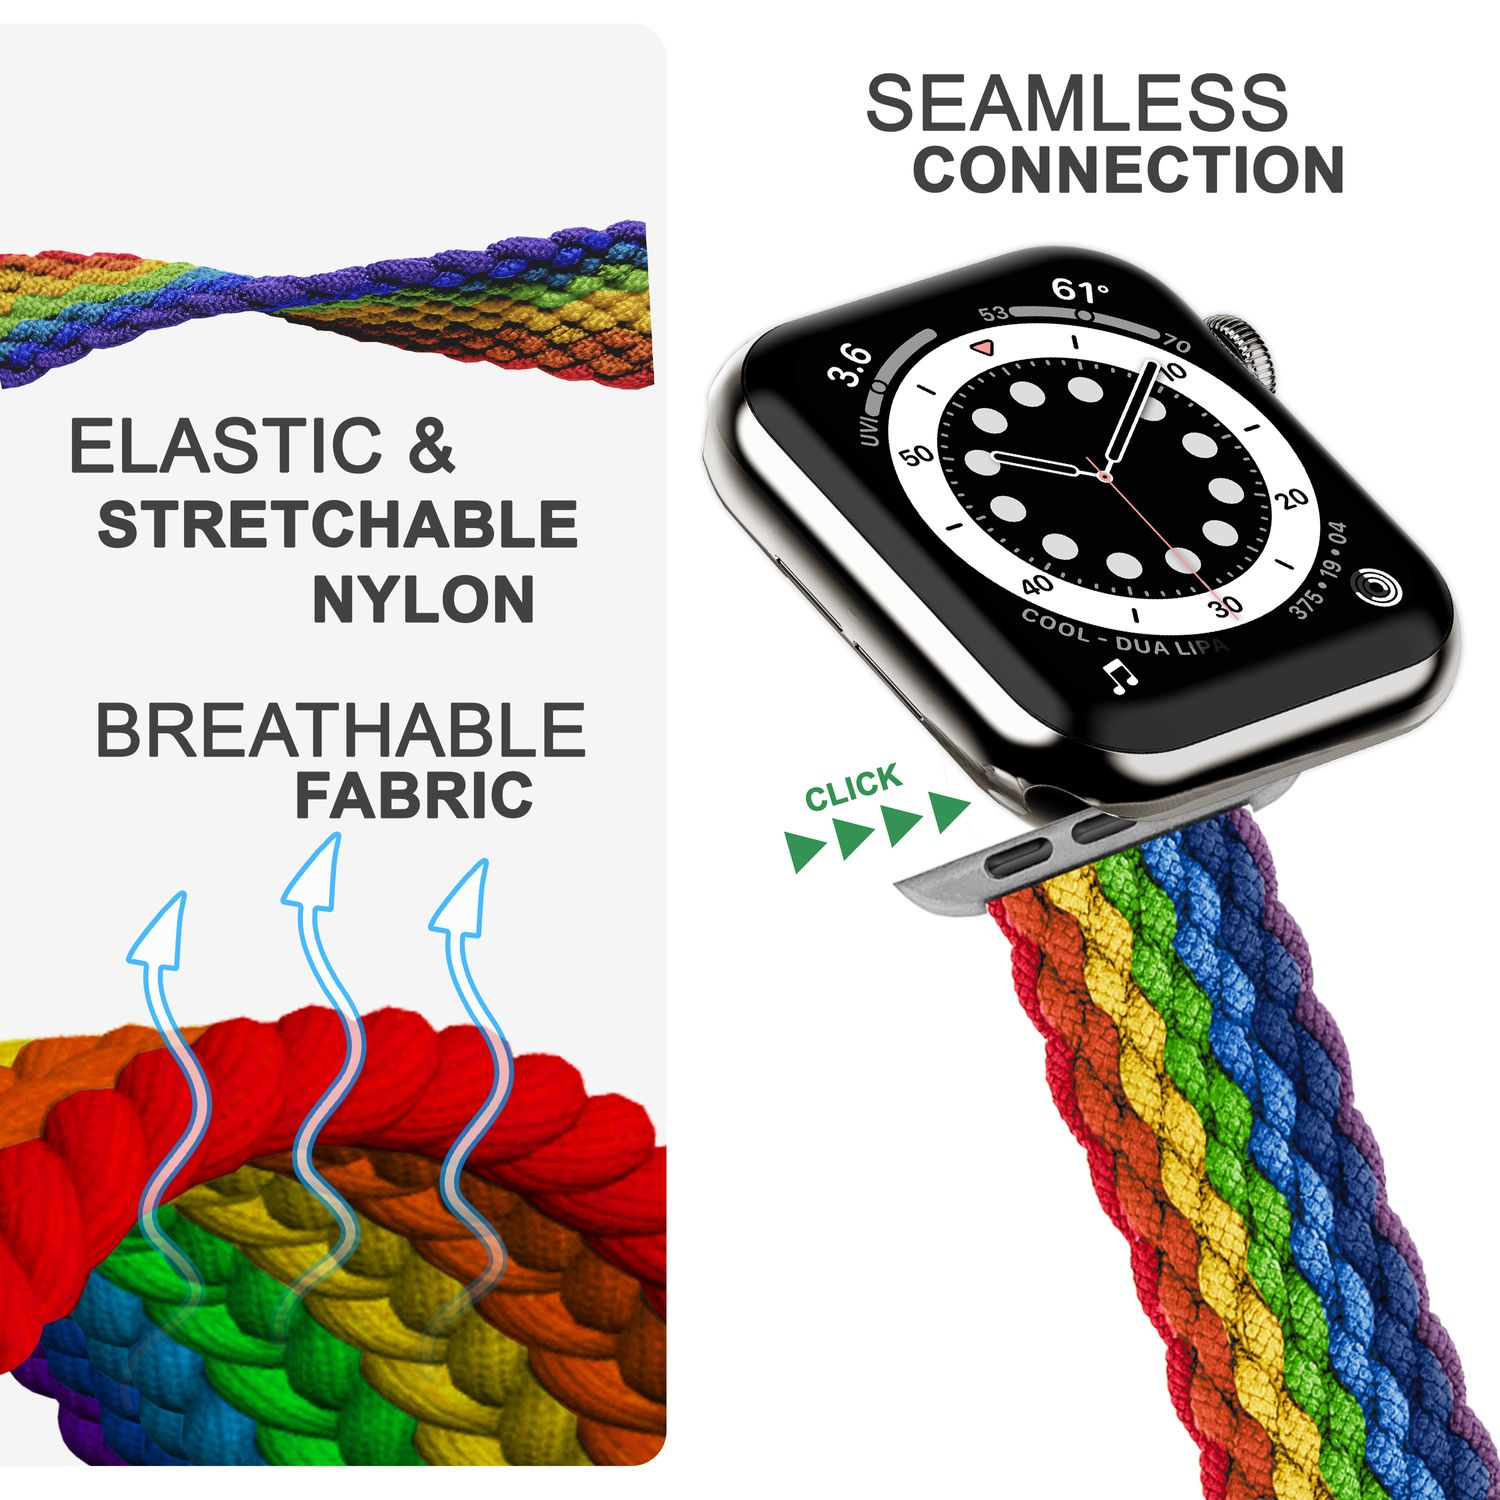 NALIA Geflochtenes Smart-Watch Armband, Apple Watch Apple, 42mm/44mm/45mm/49mm, Ersatzarmband, Regenbogen